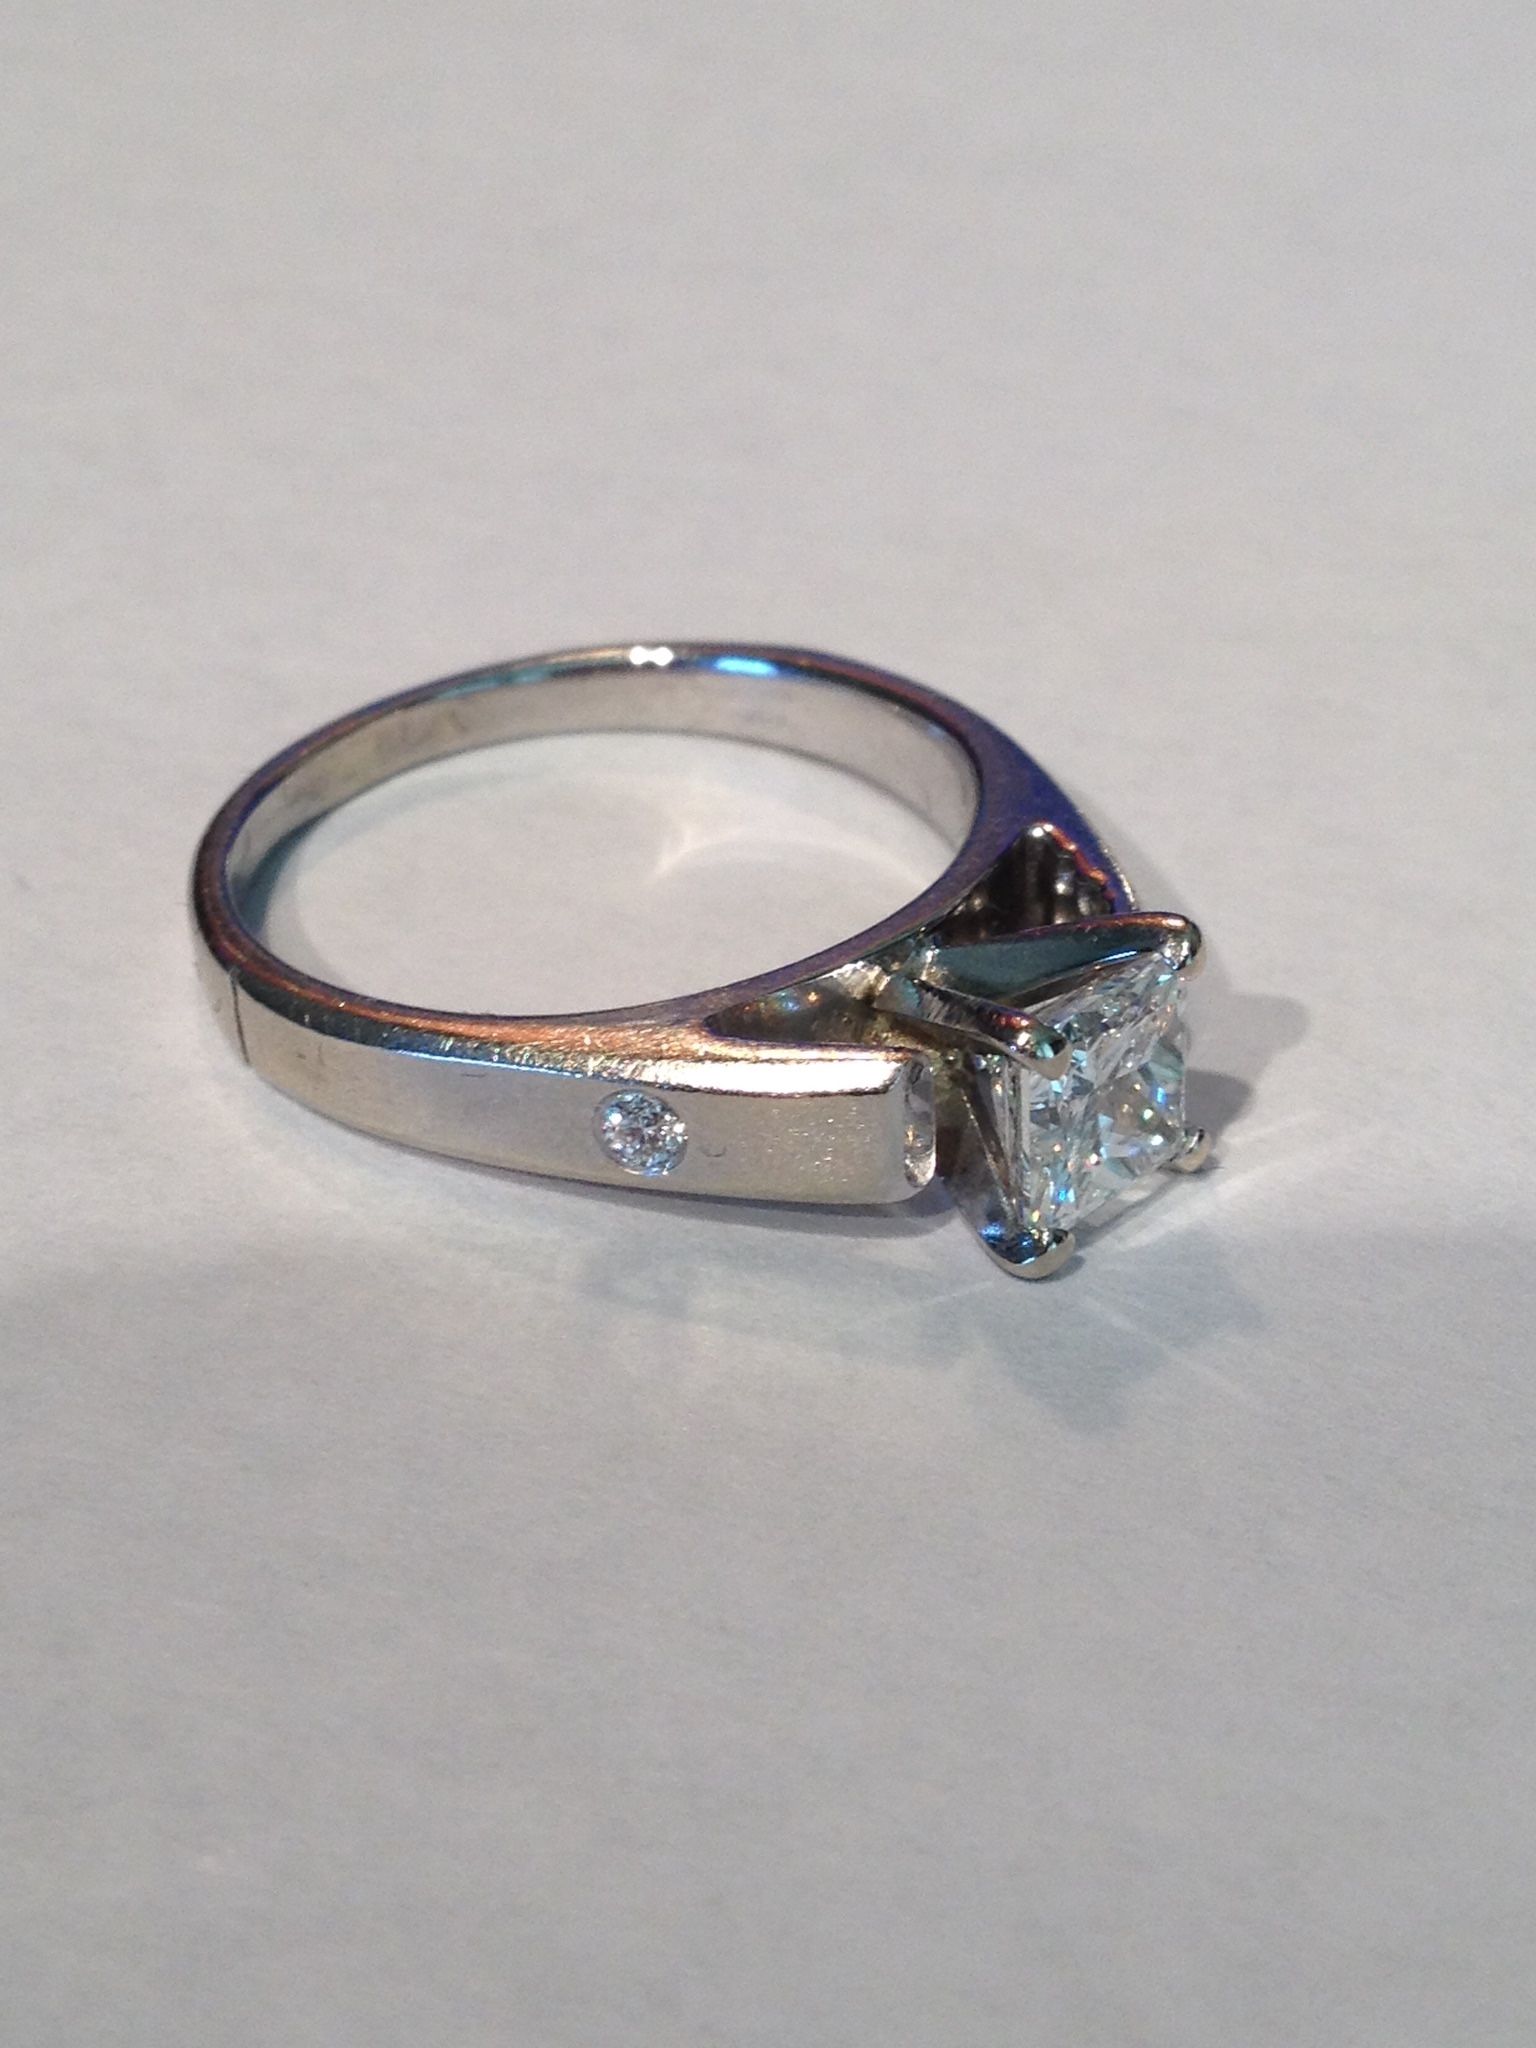 Size 7 Engagement Ring Princess Cut